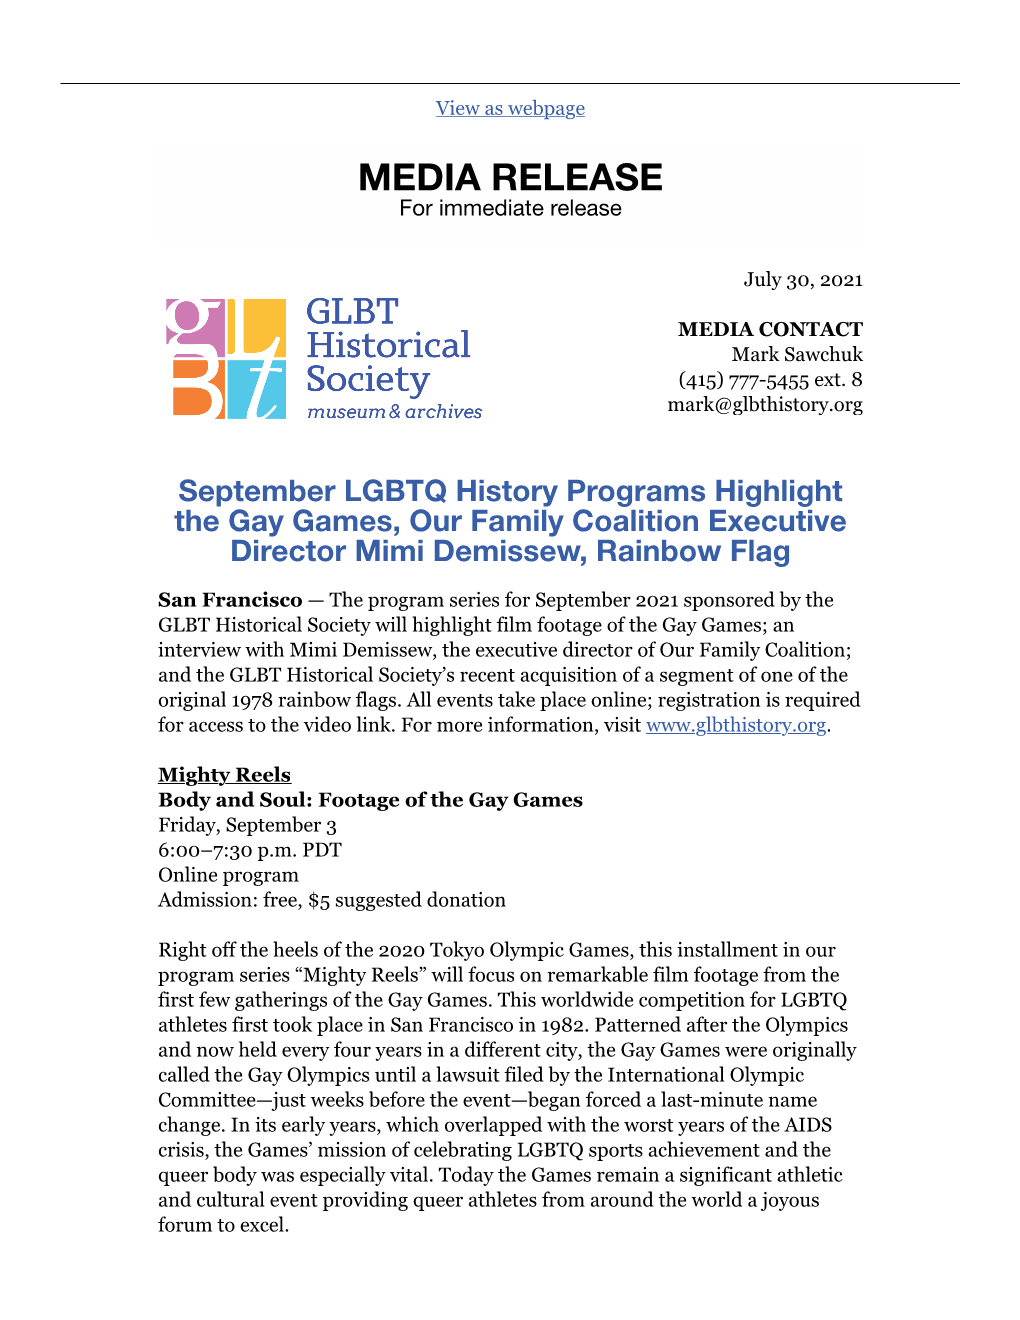 September 2021 Programs by the GLBT Historical Society